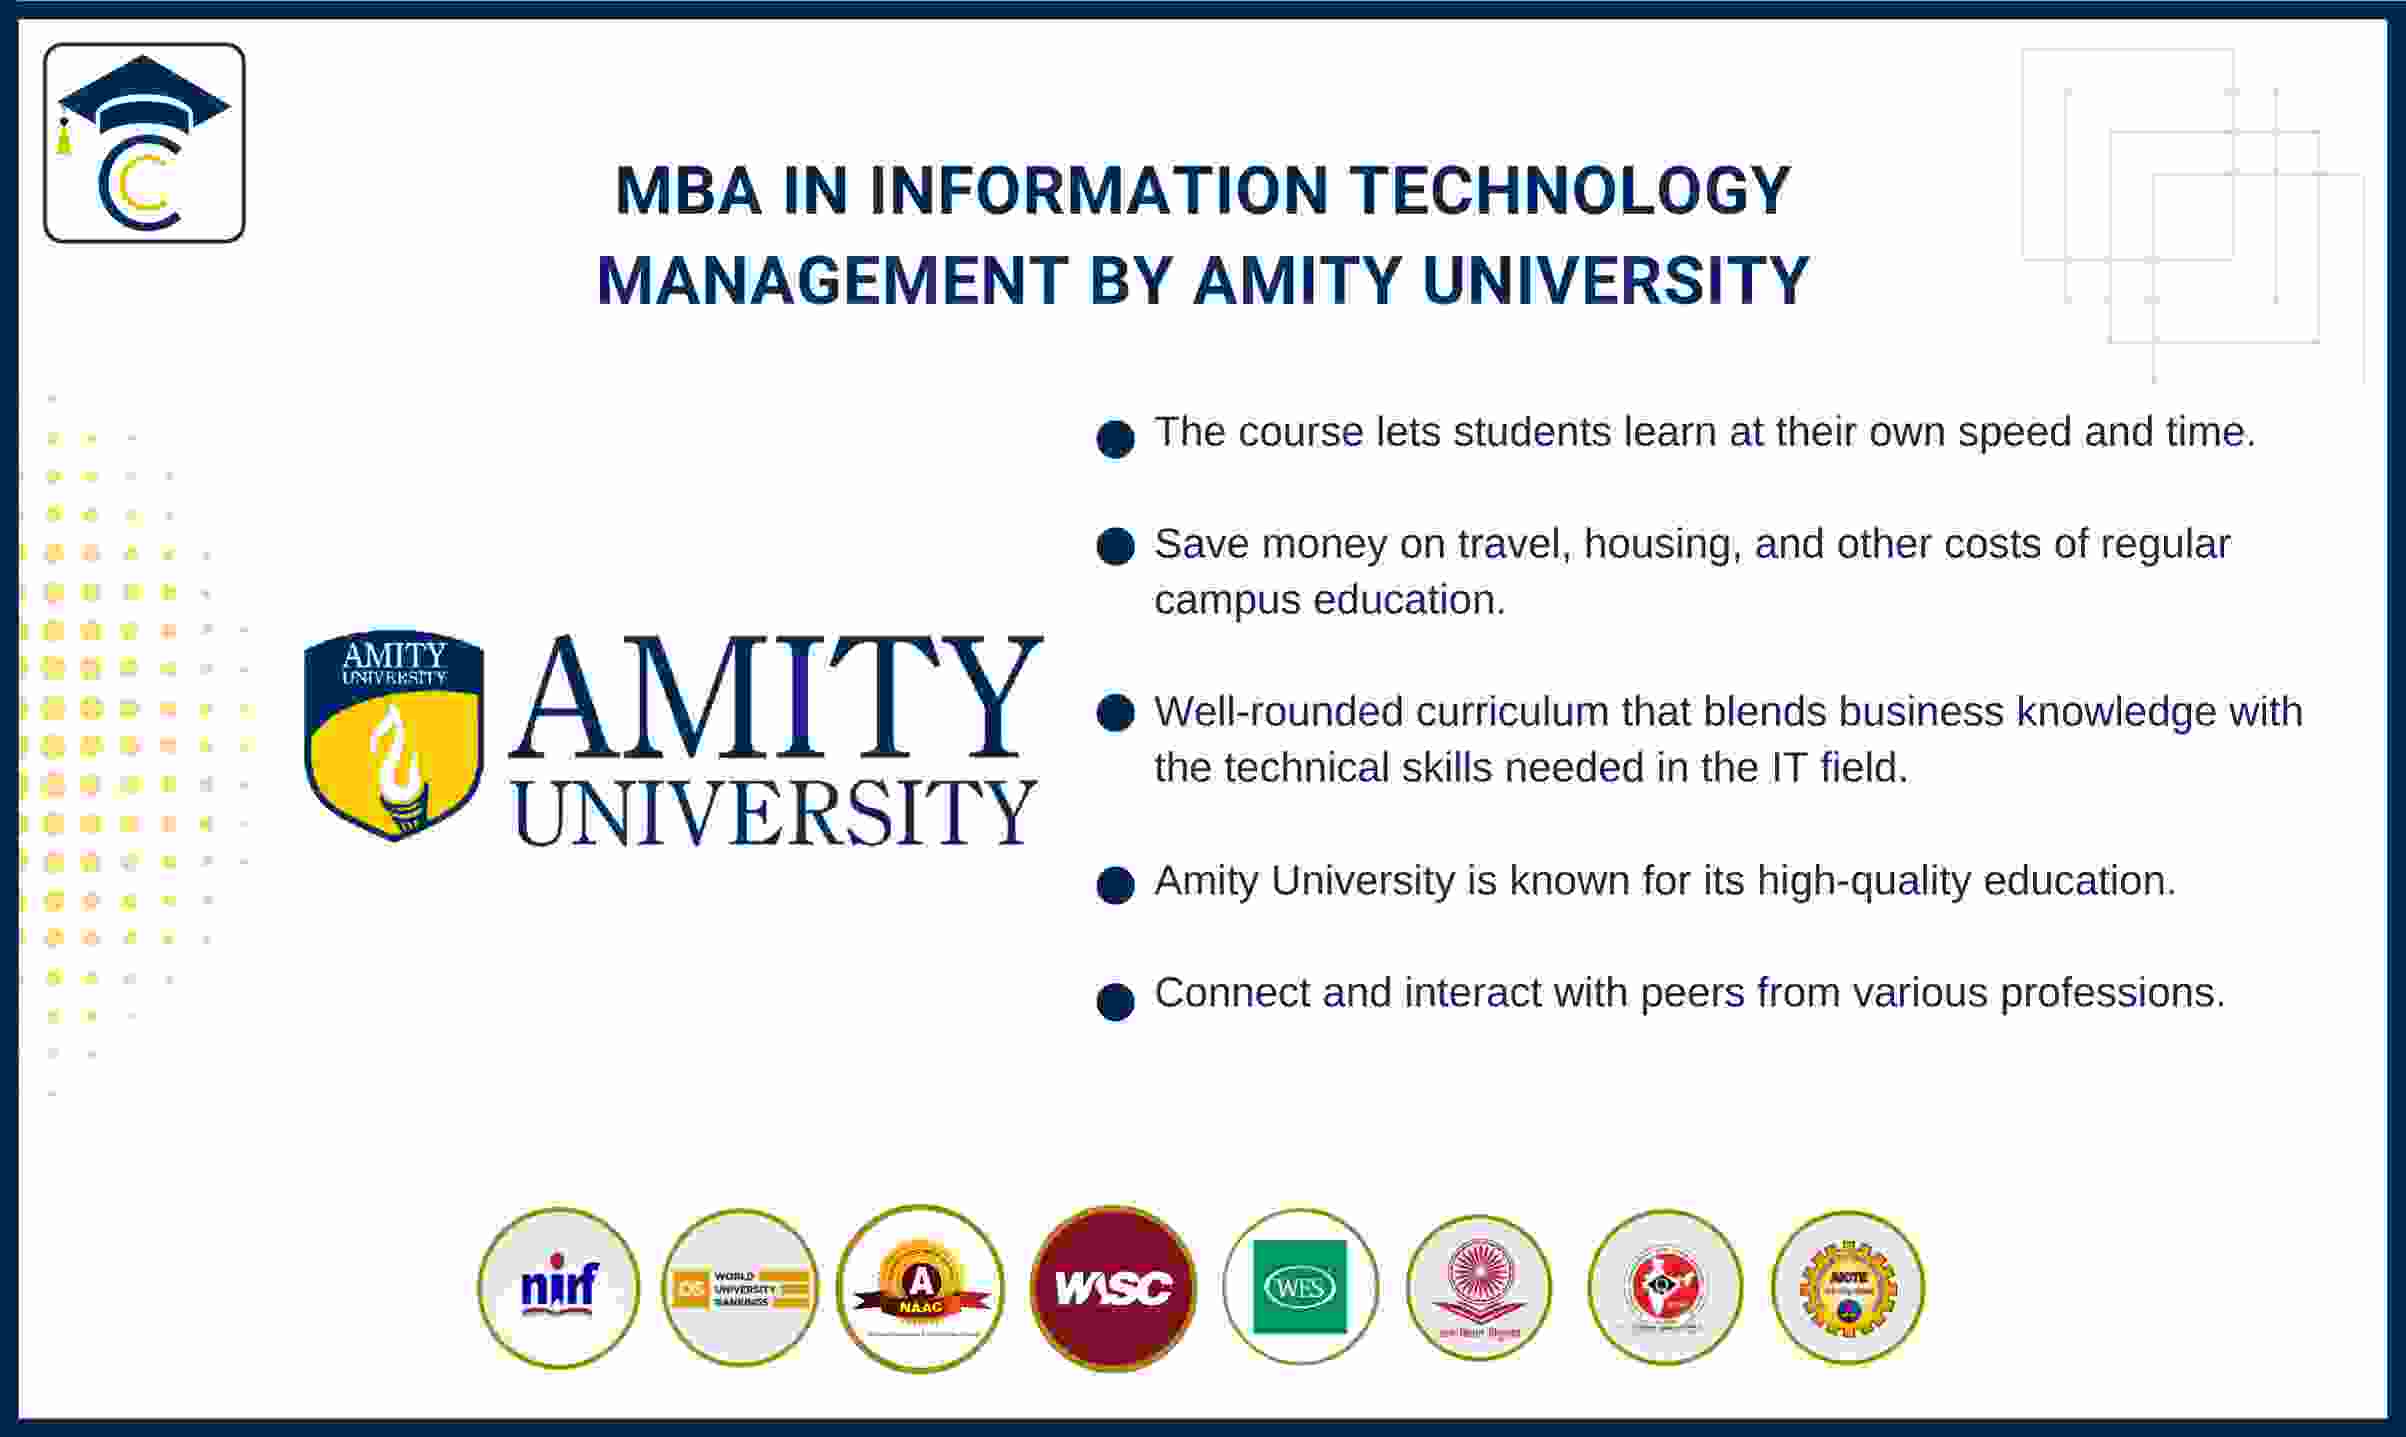 mba-in-information-technology-management-amity-university